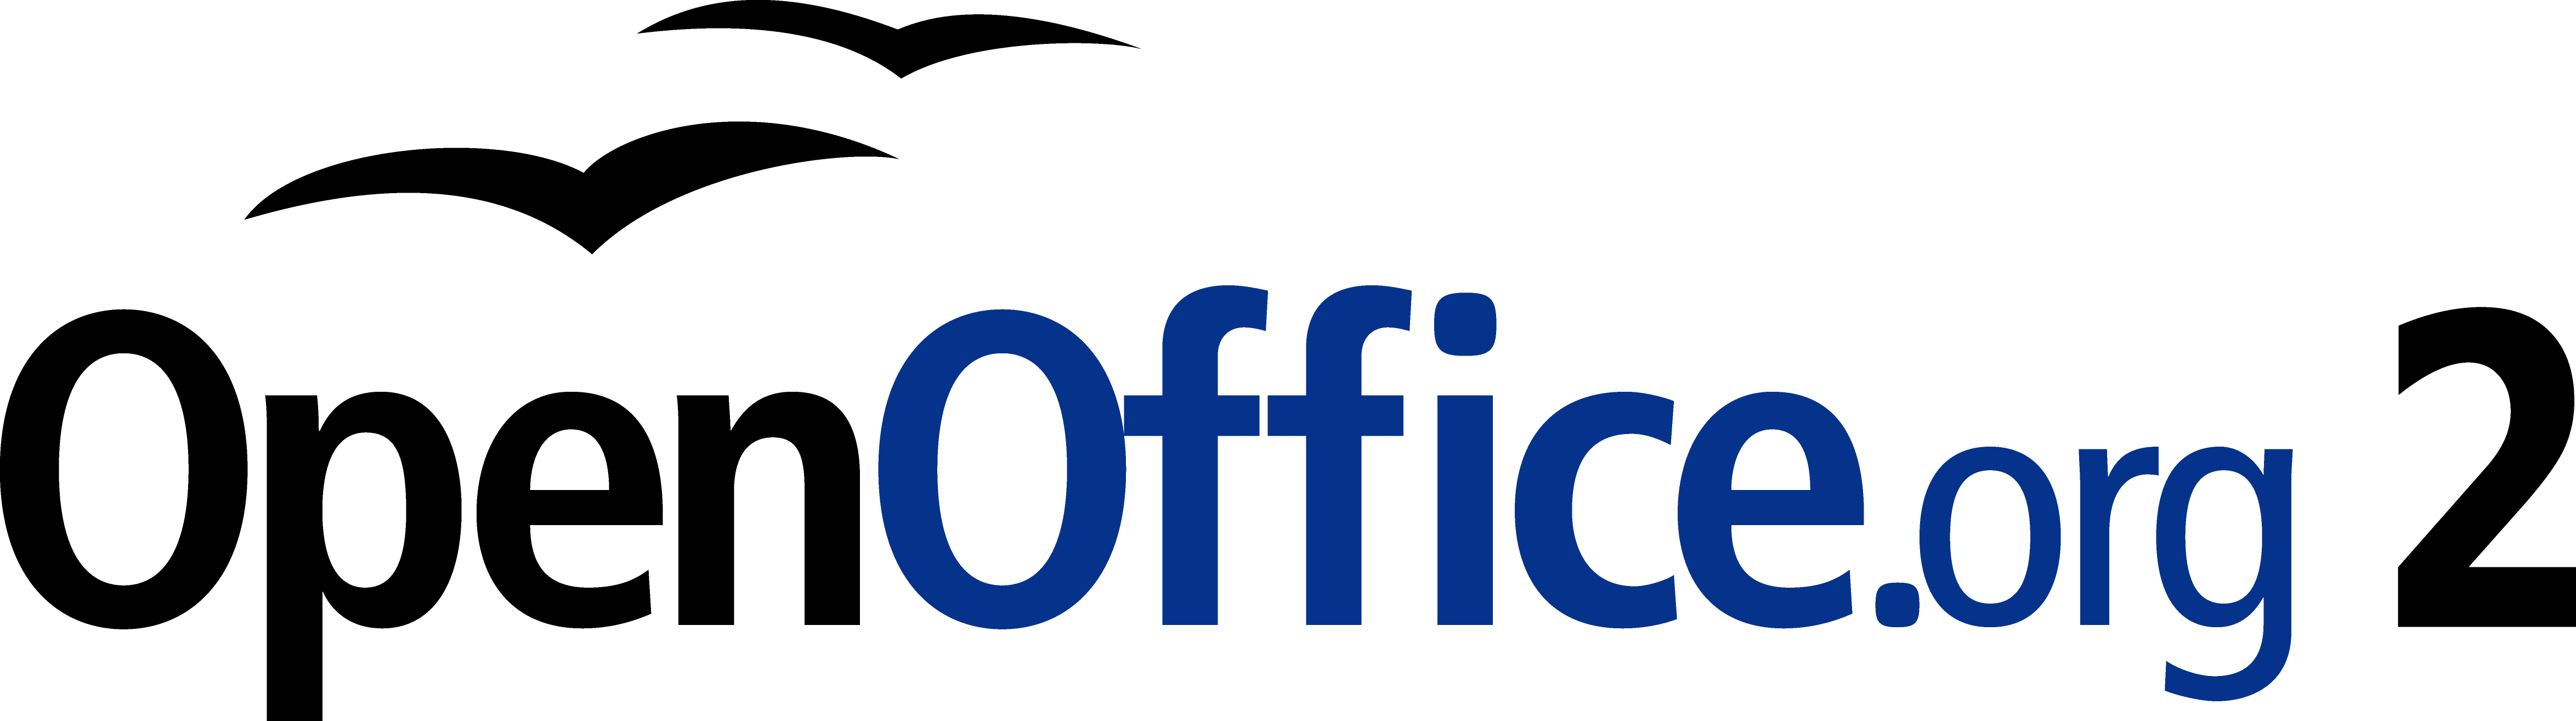 Org.Apache Logo - OpenOffice.org Art Logos Gallery